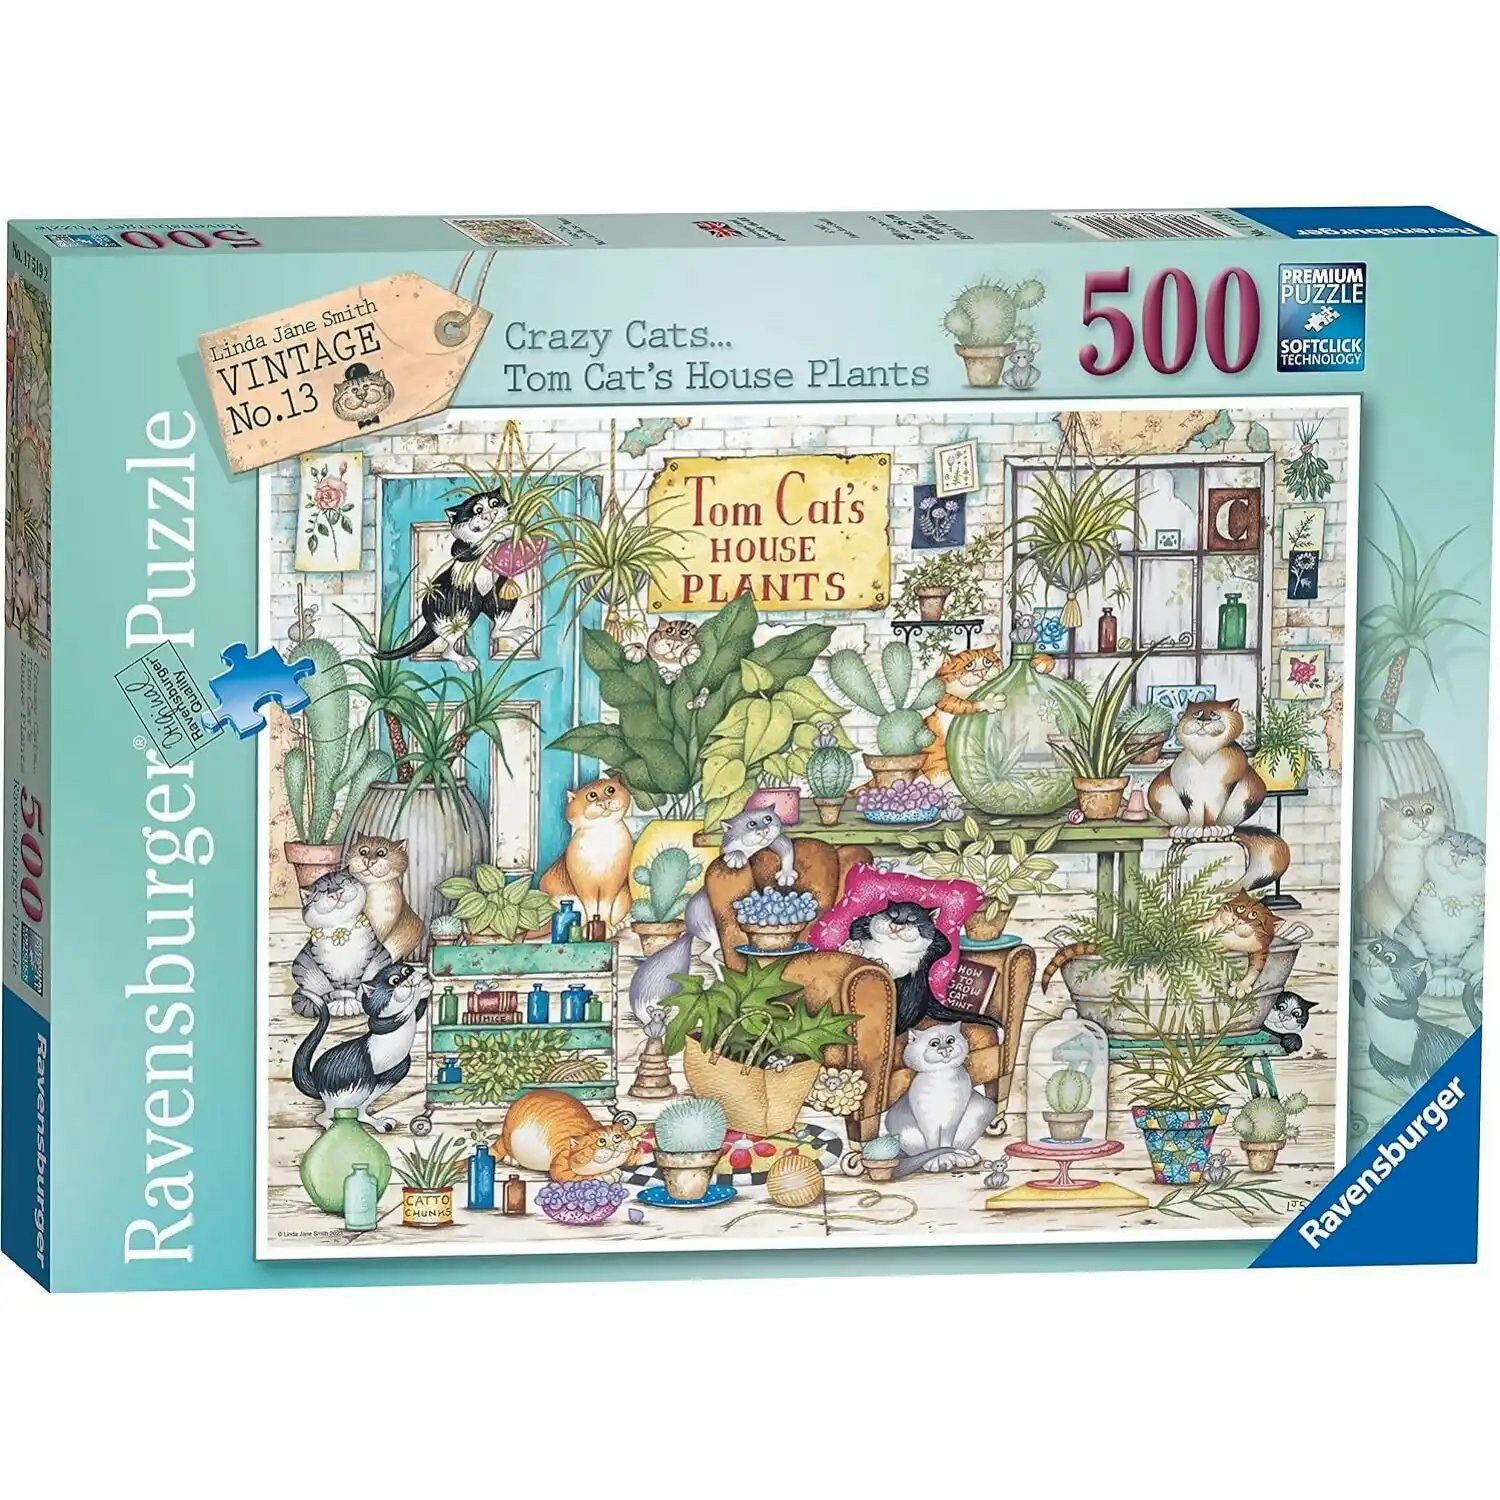 Ravensburger - Crazy Cats Tom Cats House Plants Jigsaw Puzzle 500pc